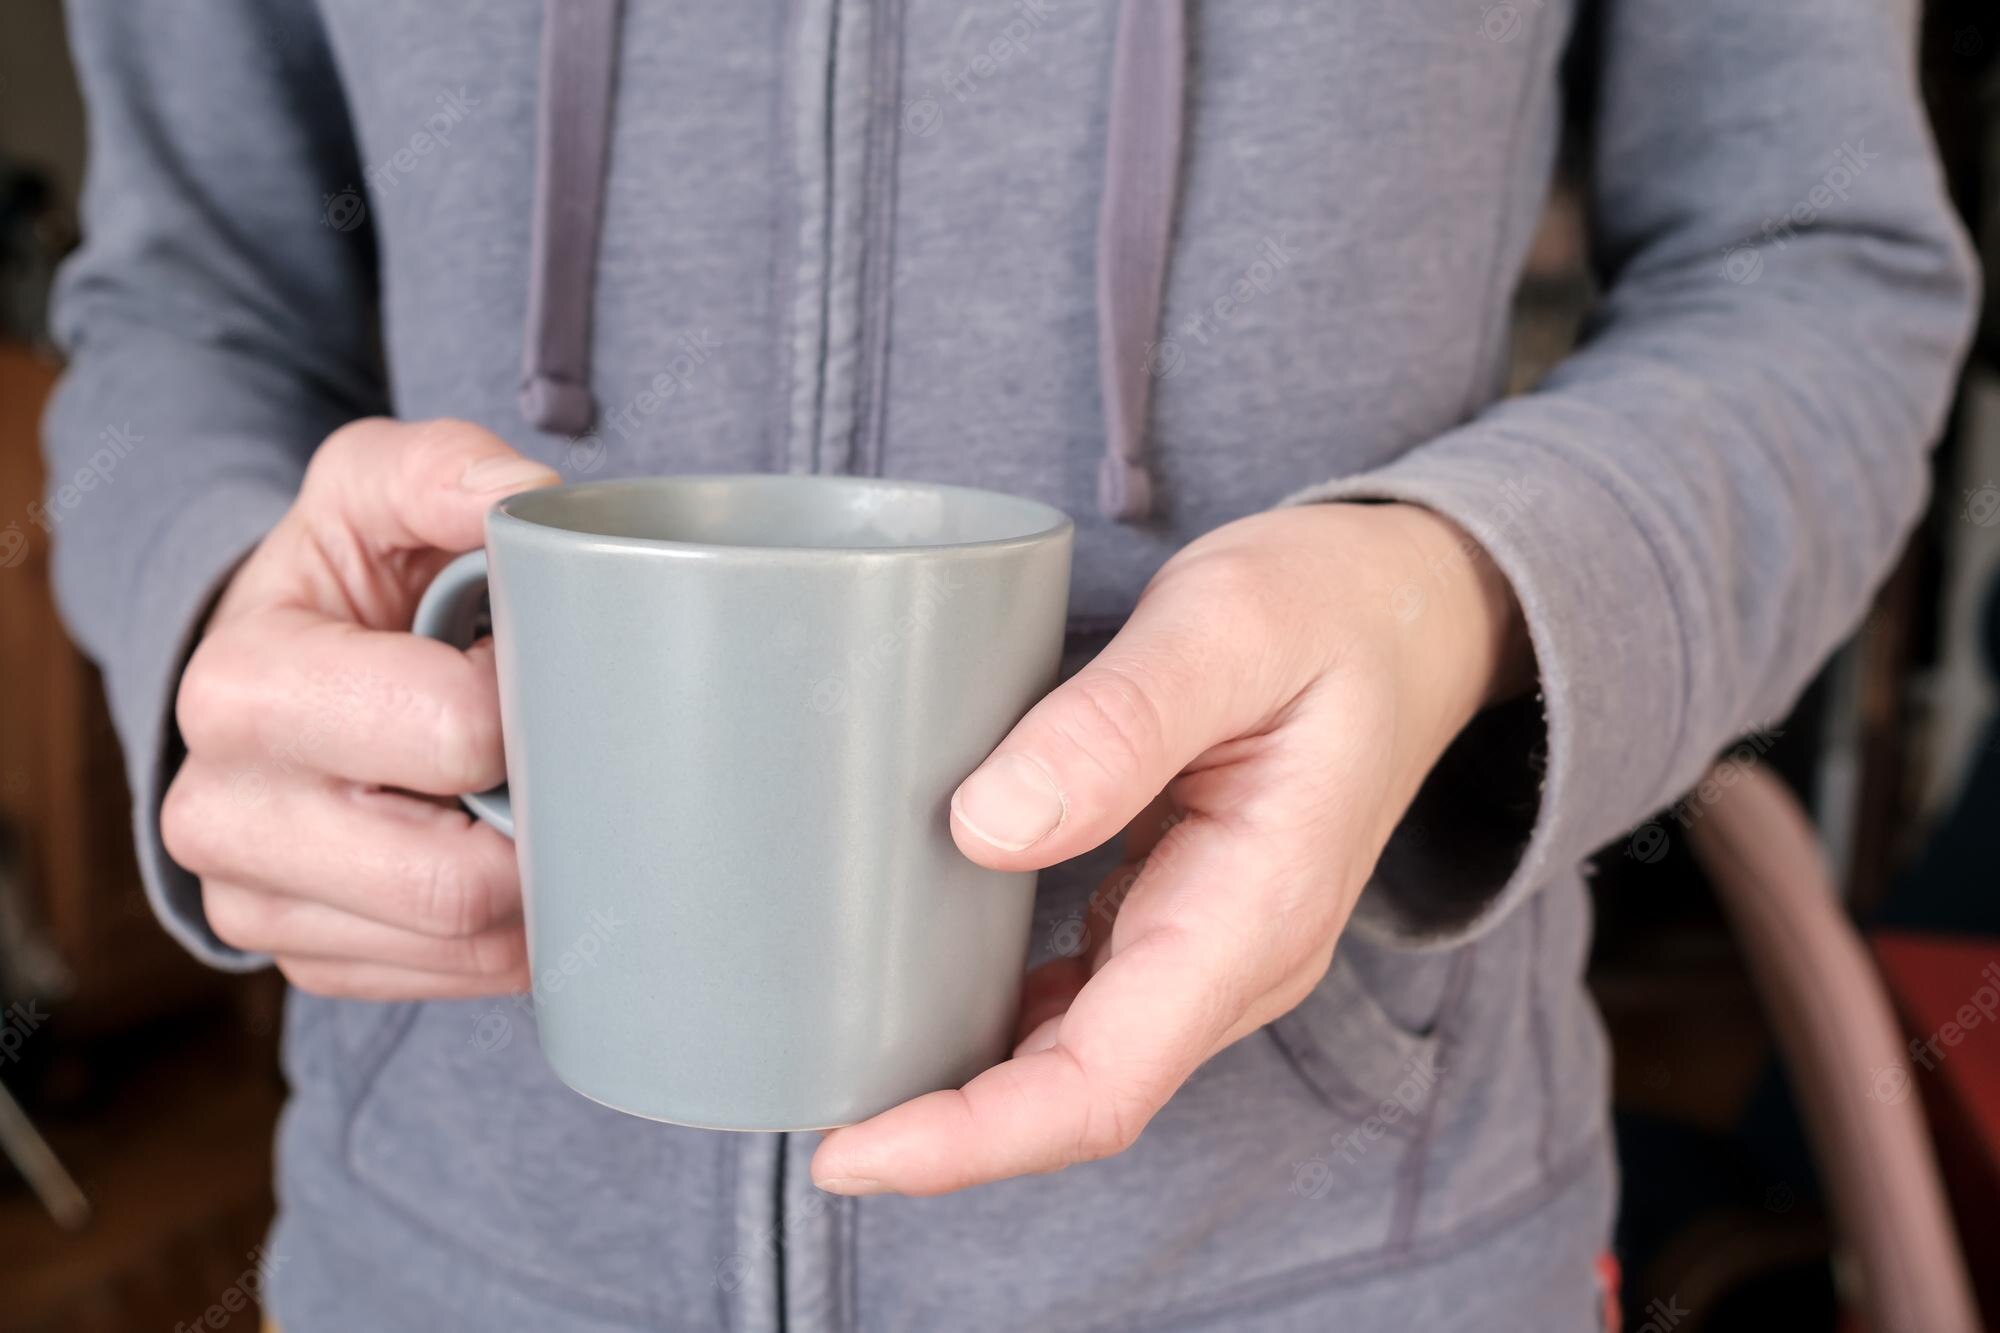 What hand do you hold a mug?